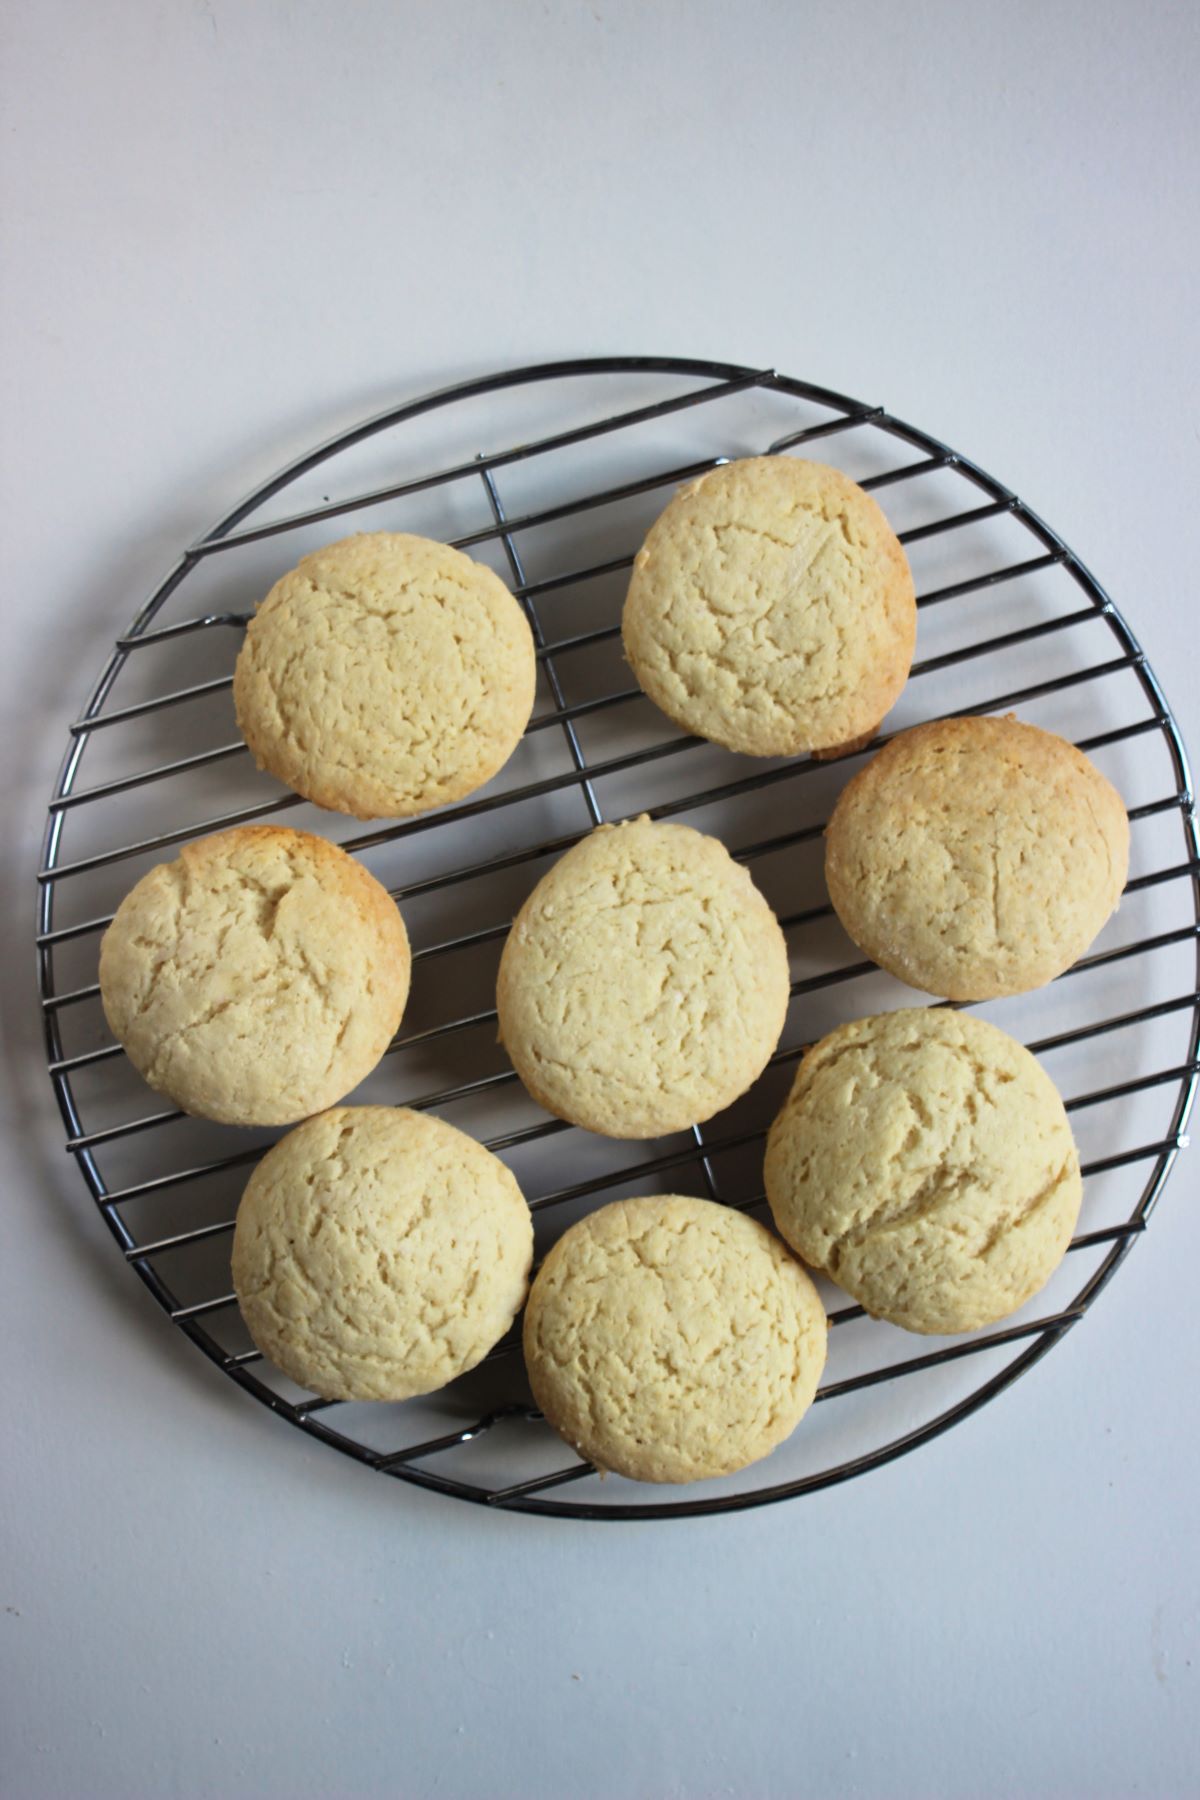 Shortcake biscuits on a round wire rack.